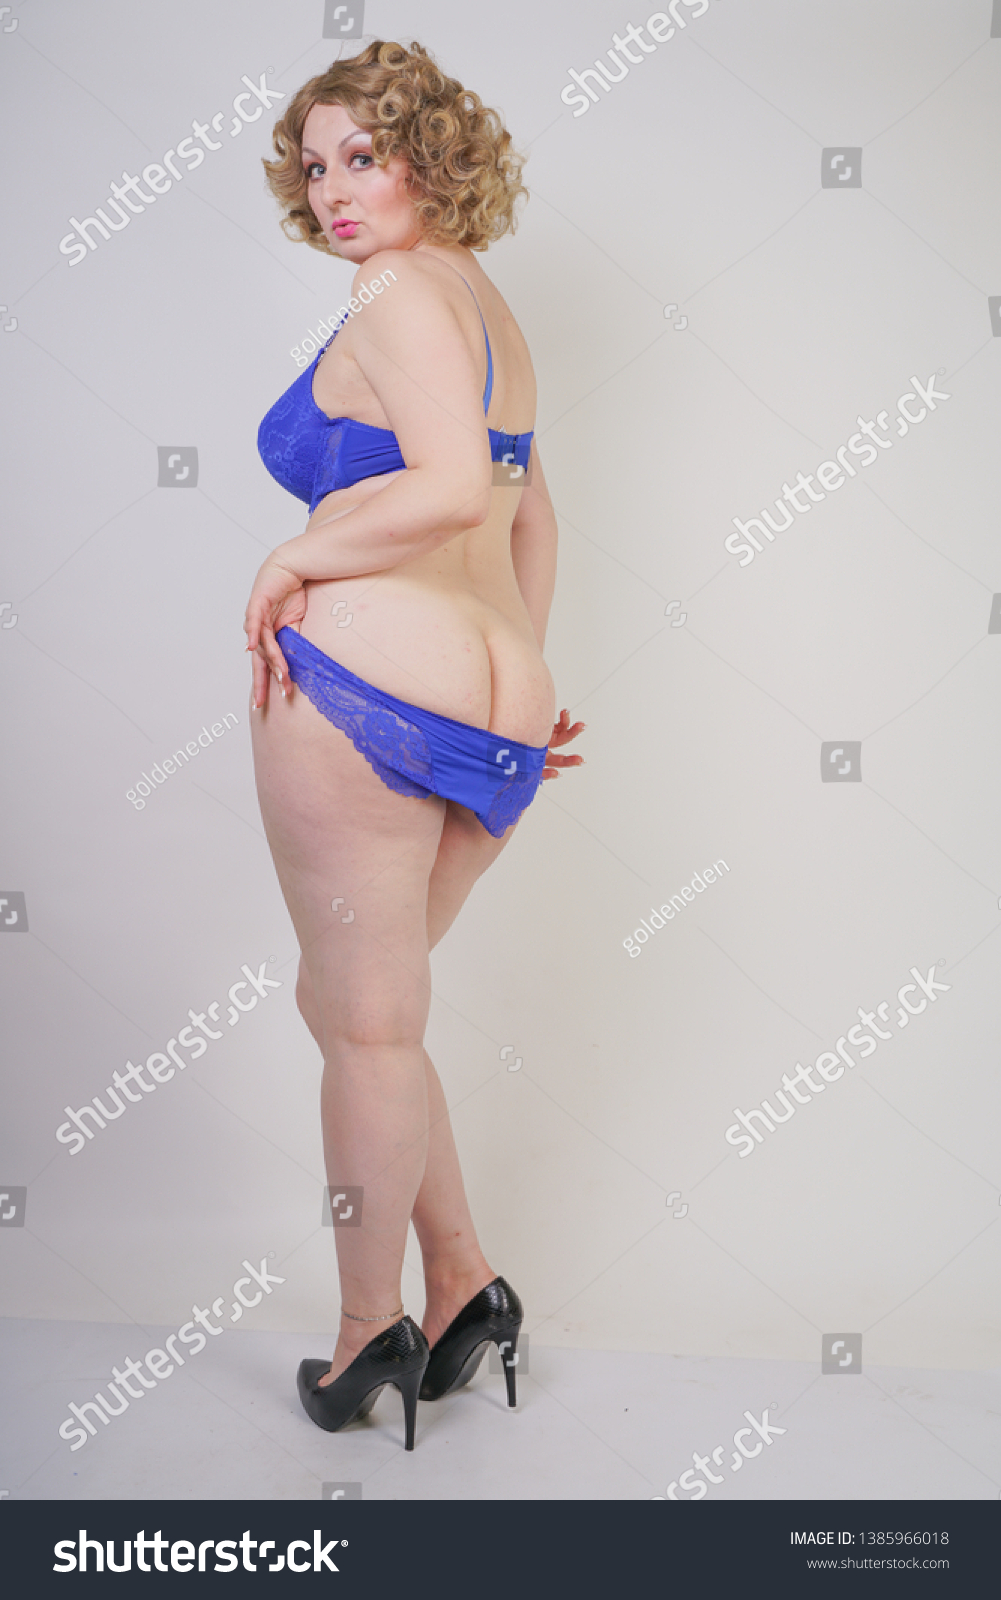 caroline maclennan add sexy chubby white women photo